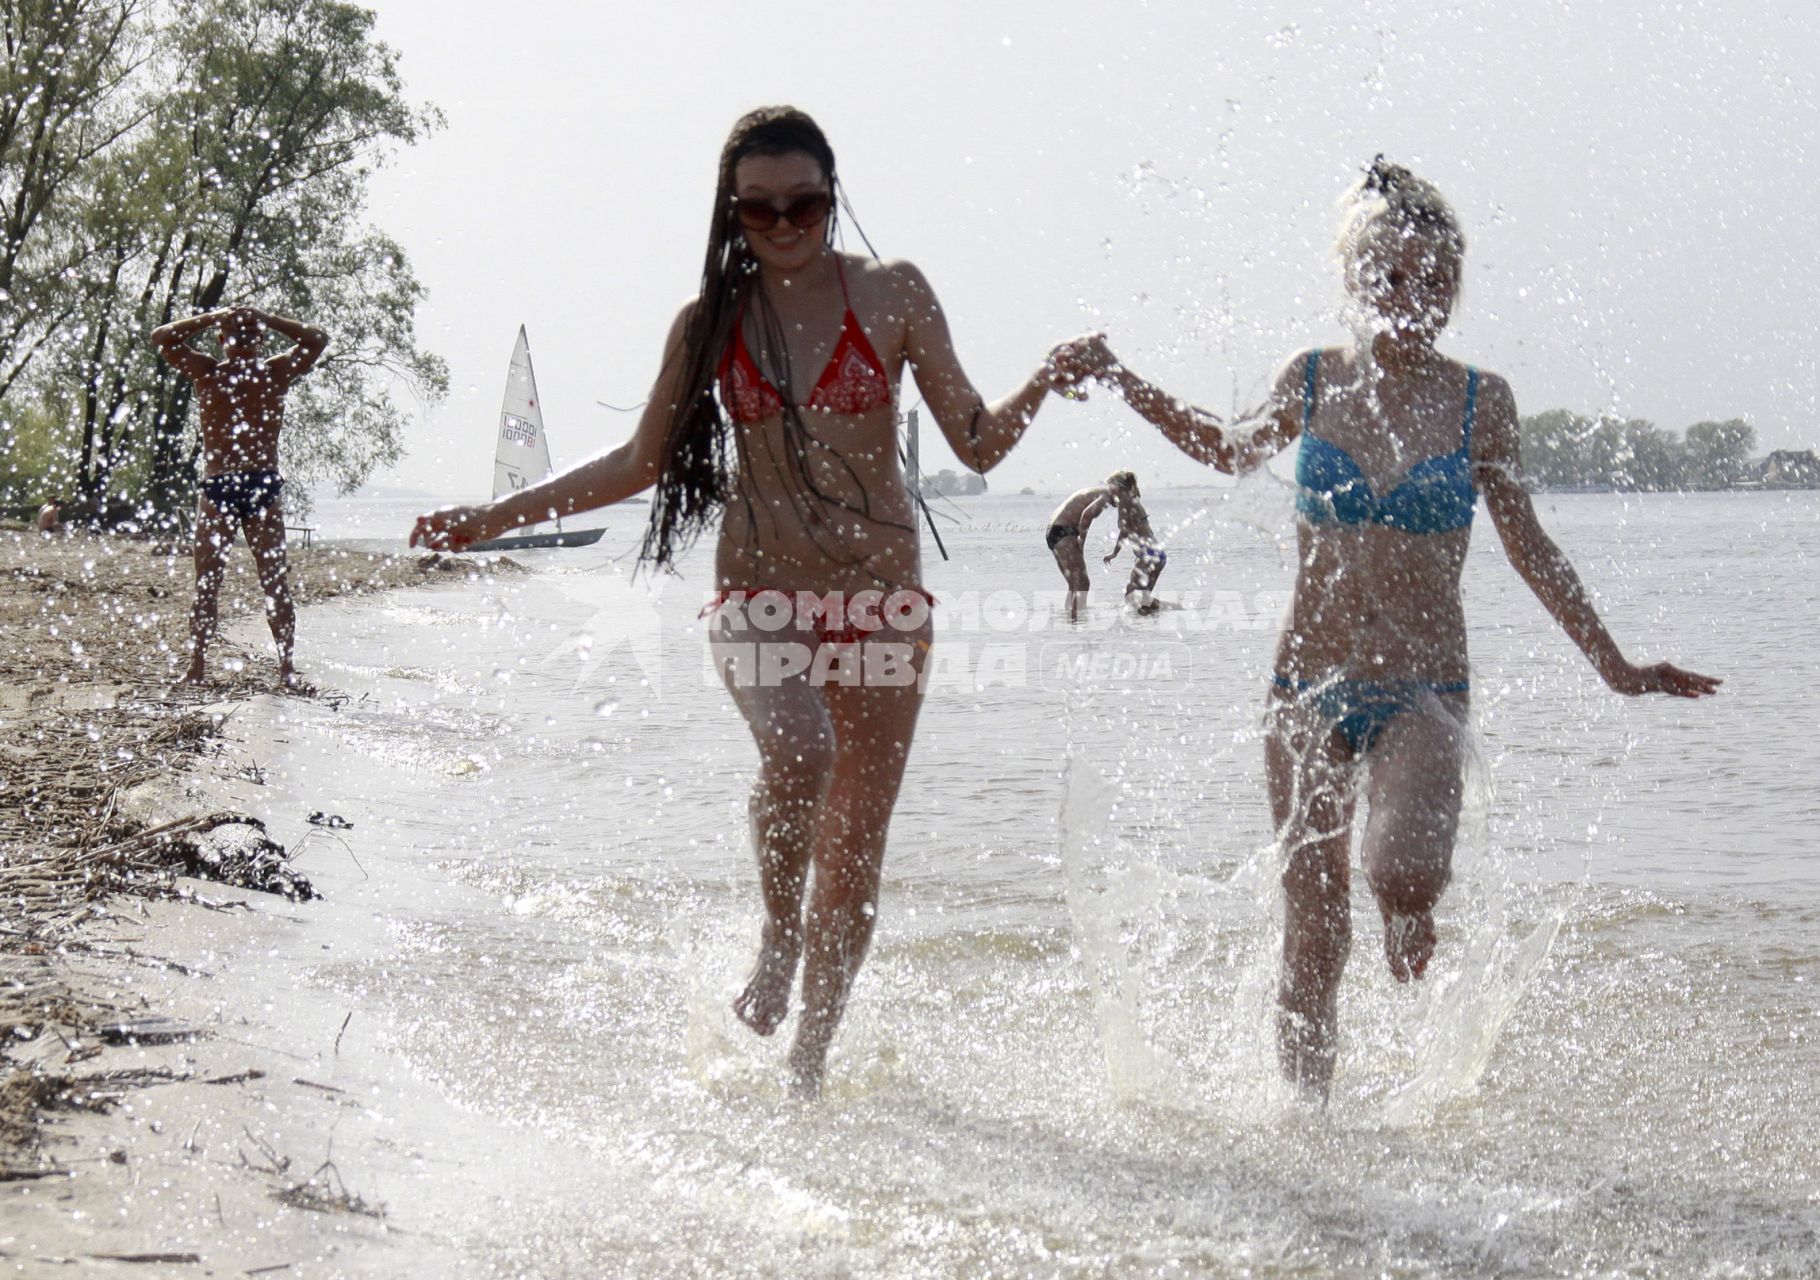 На пляже две девушки бегут с брызгами по воде.